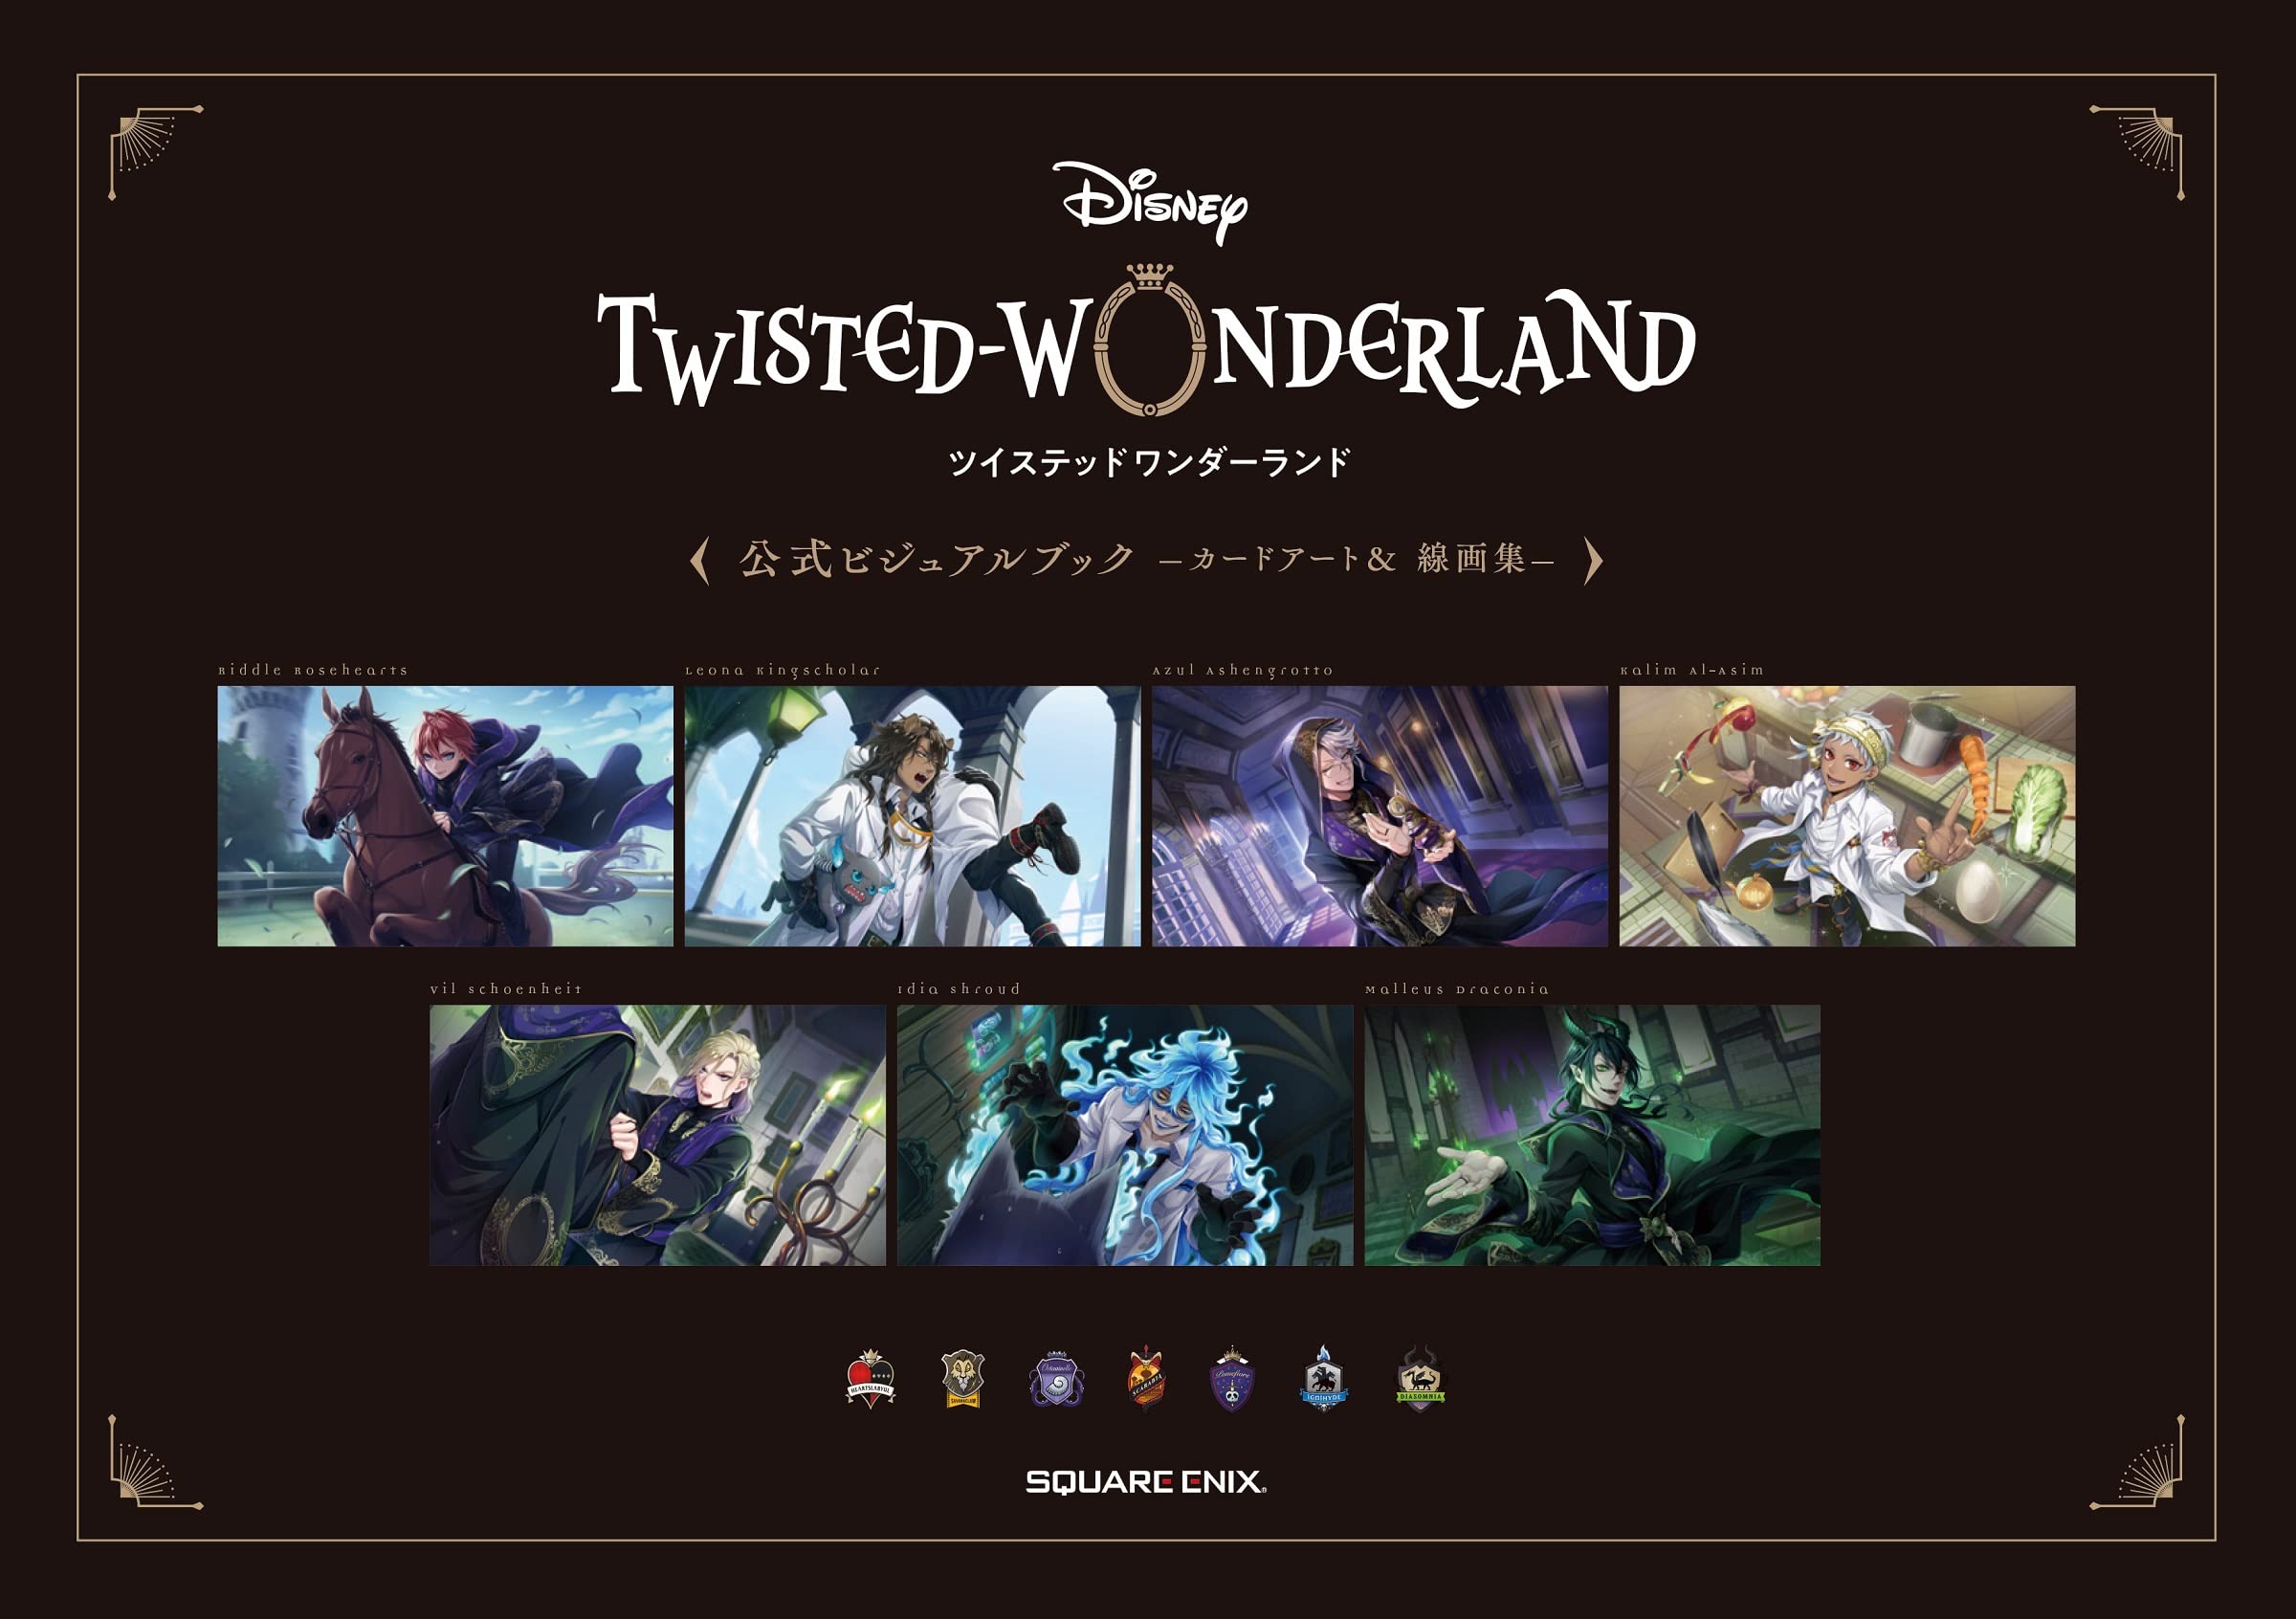 Disney Twisted Wonderland 公式ビジュアルブック -カードアート&線画集